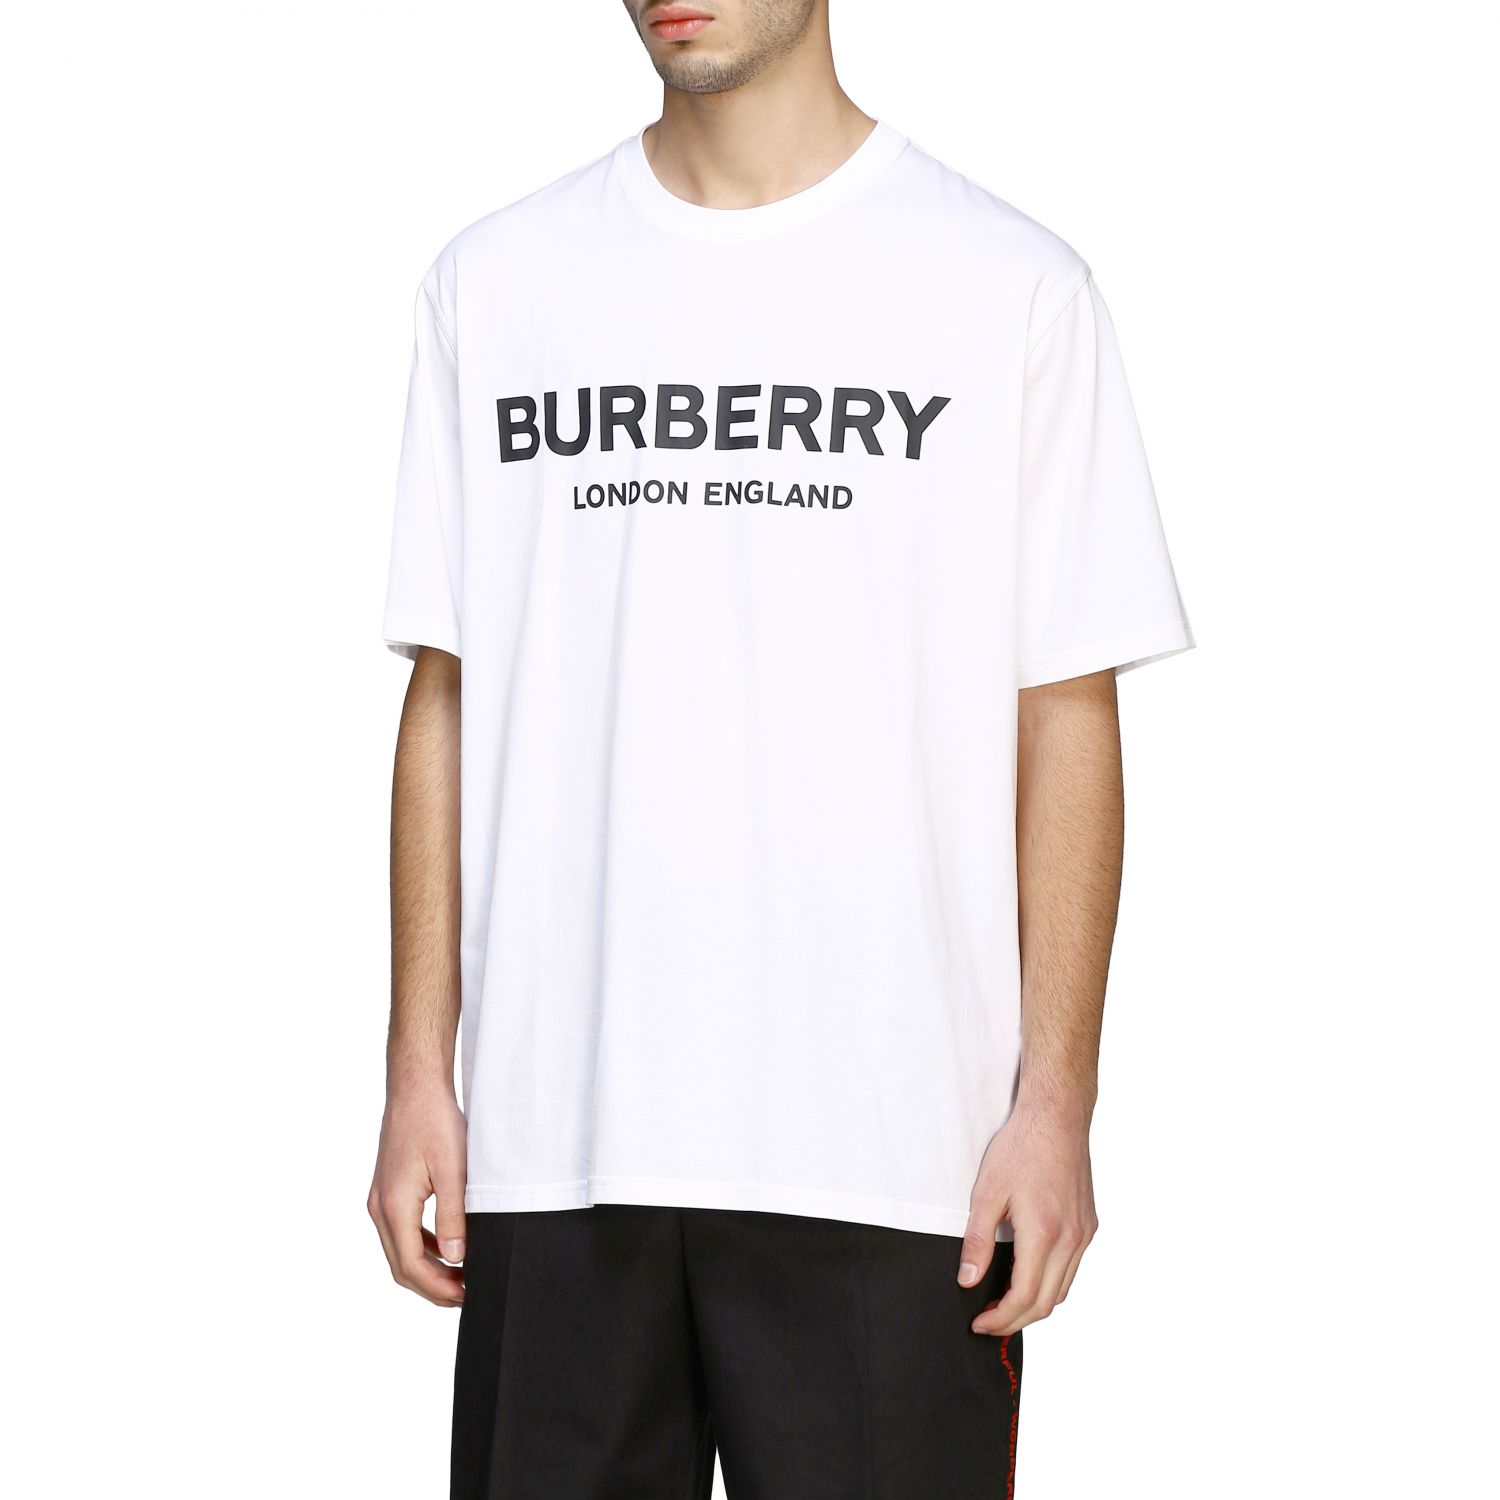 burberry shirt with logo